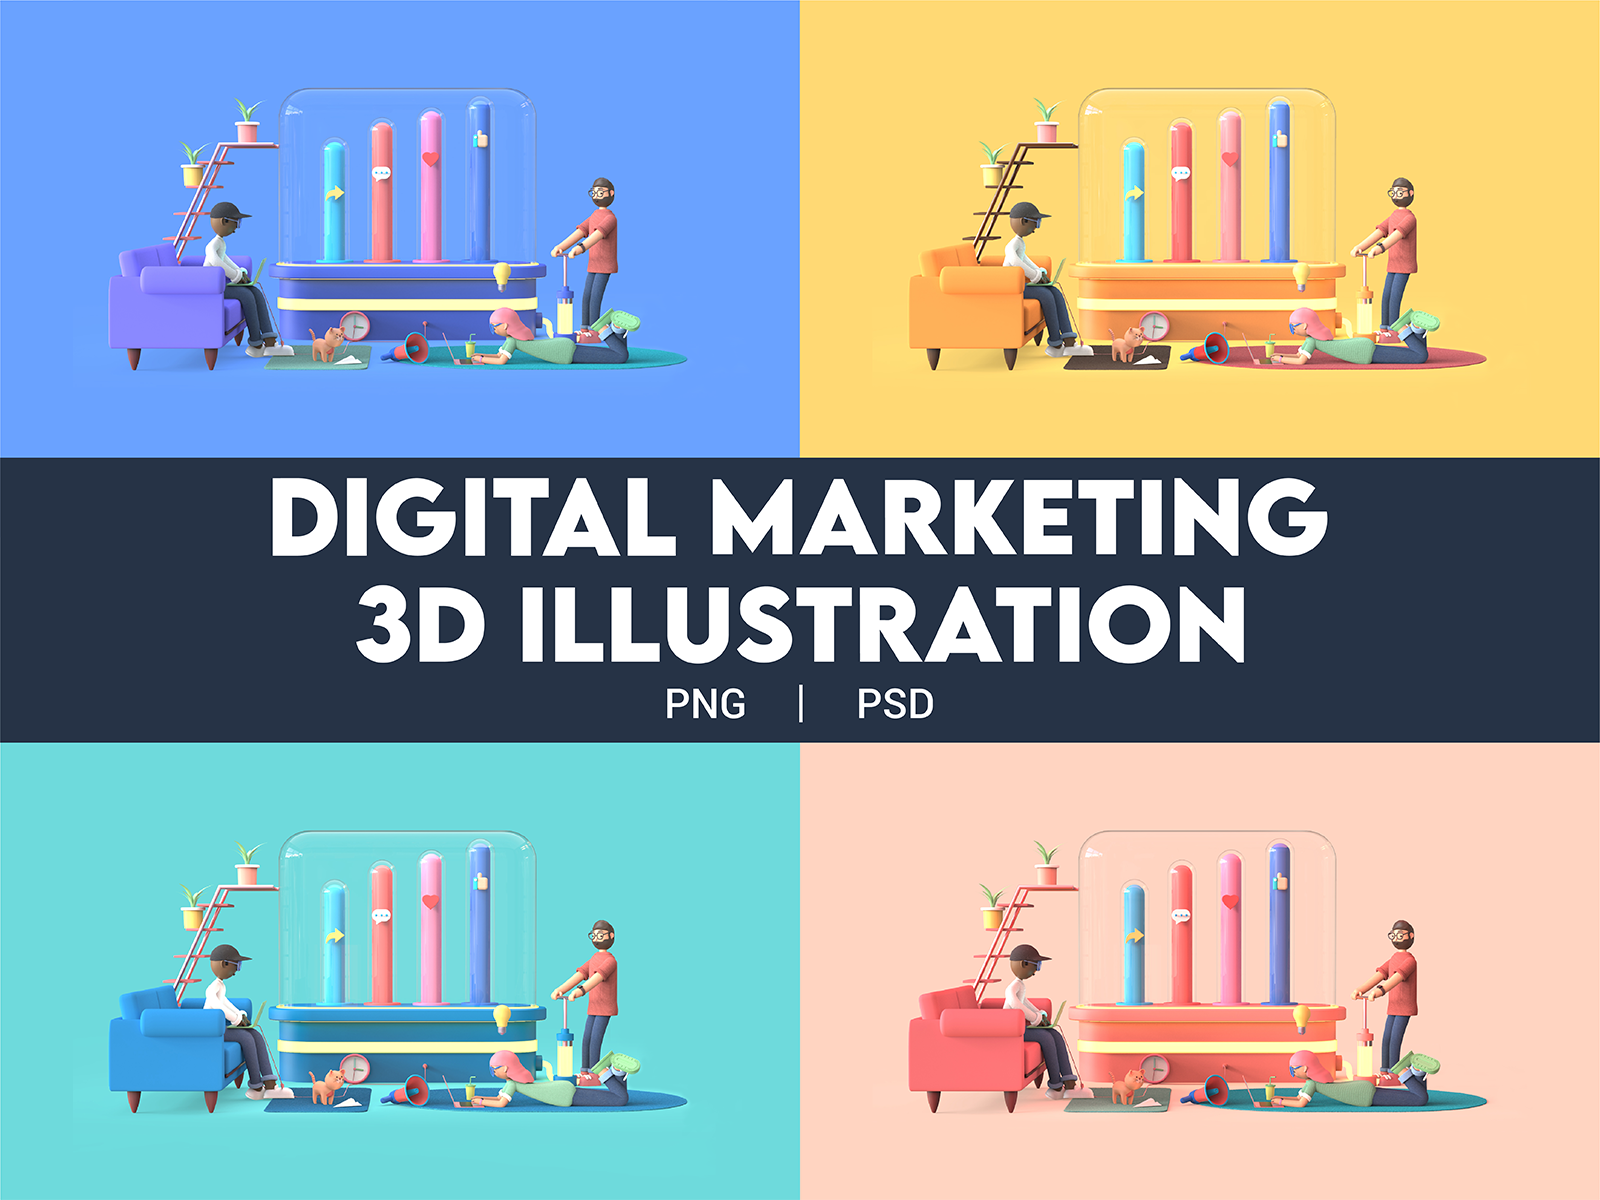 3D Digital Marketing Illustration by Krafted on Dribbble